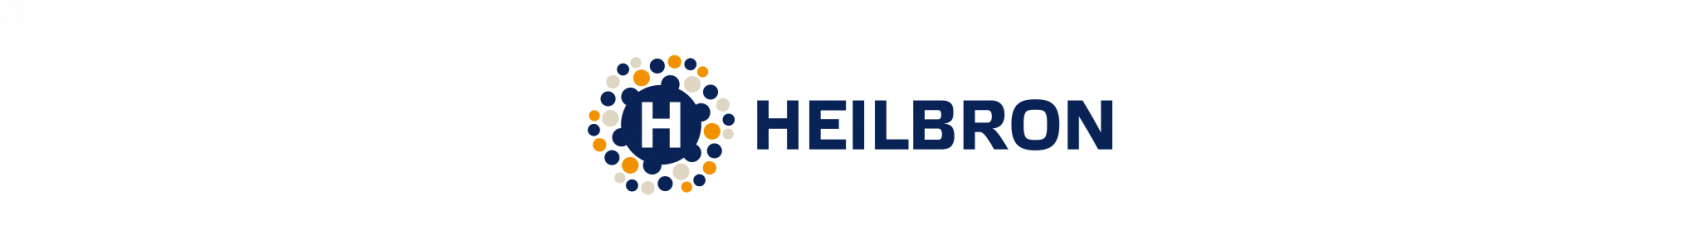 Heilbron Logo met golf